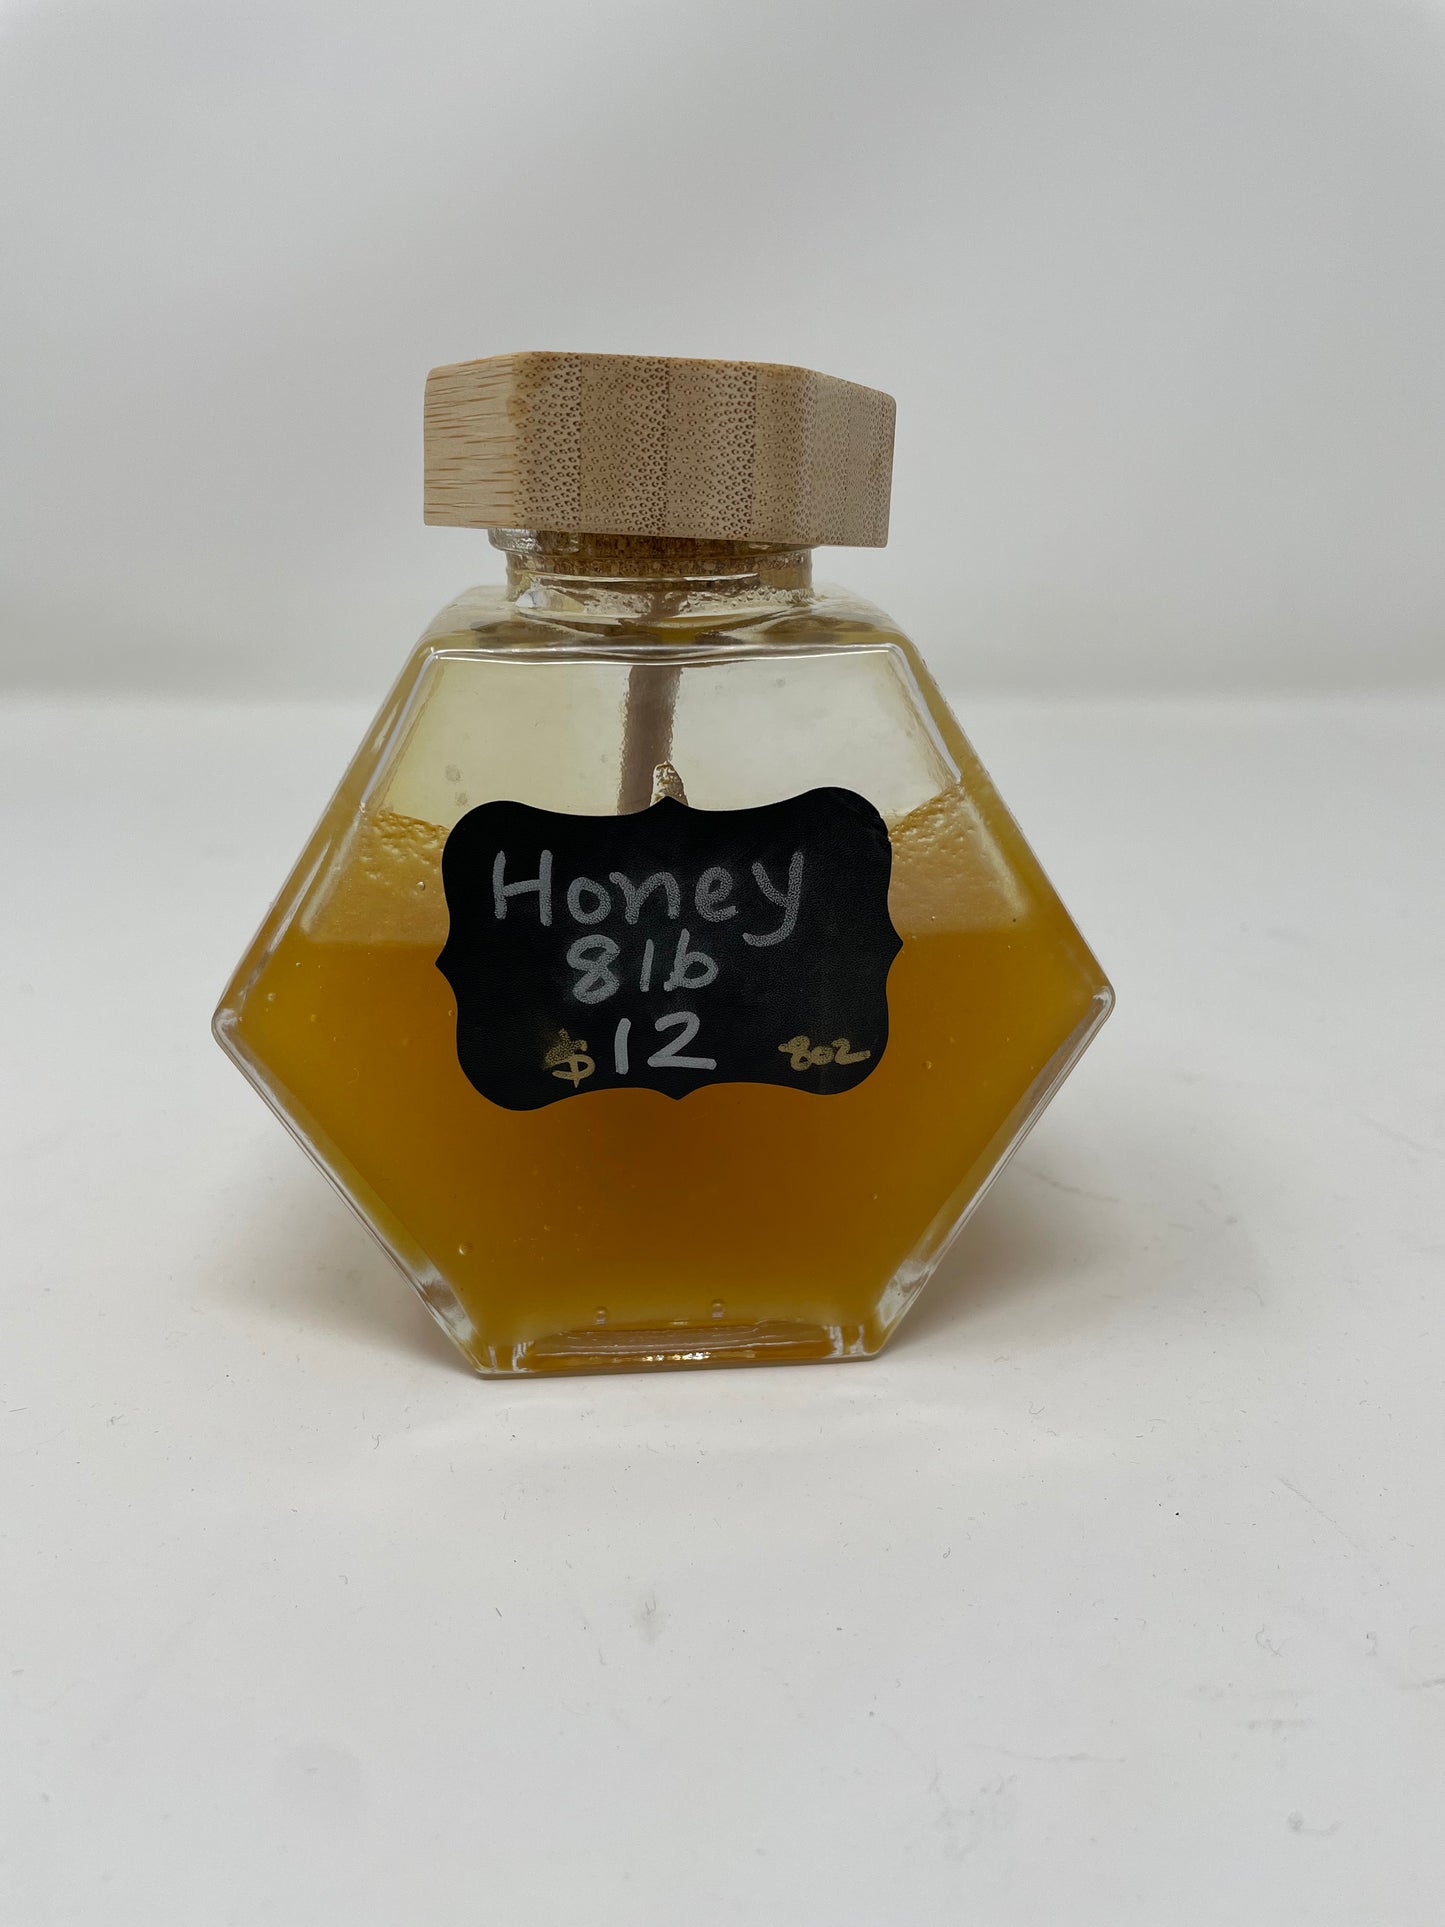 Honey (Chiweshe Honey)